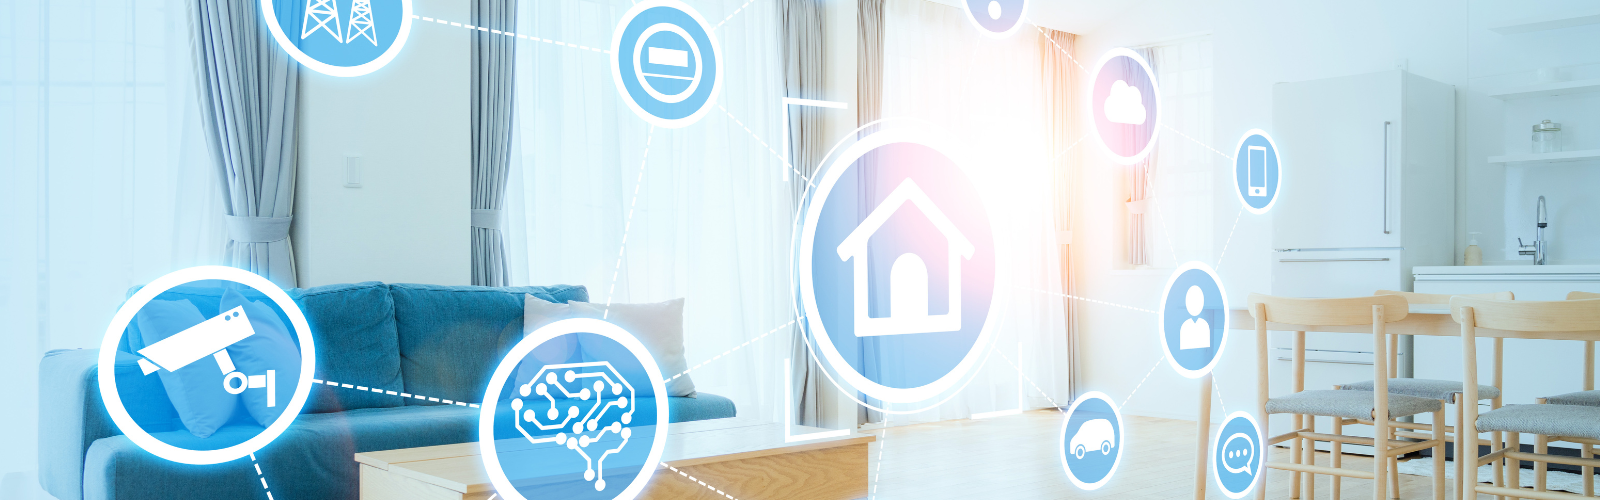 Premium Photo | Smart home interface using iot device interior design  augmented reality generative ai